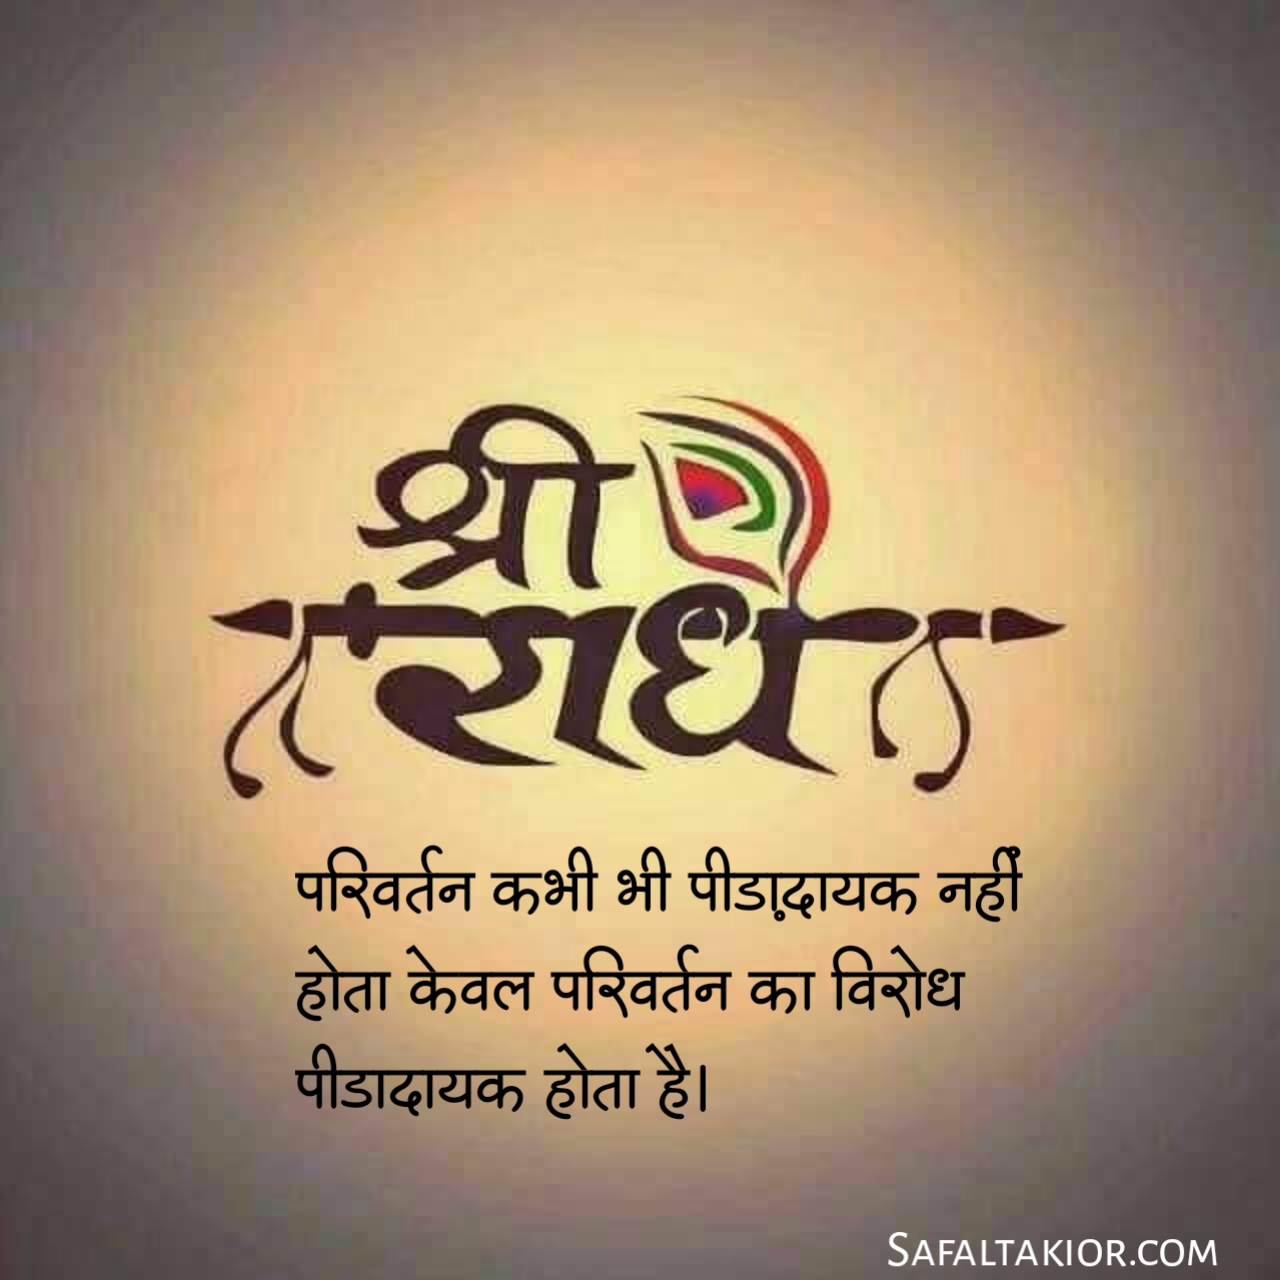 Deep Life Quotes in Hindi